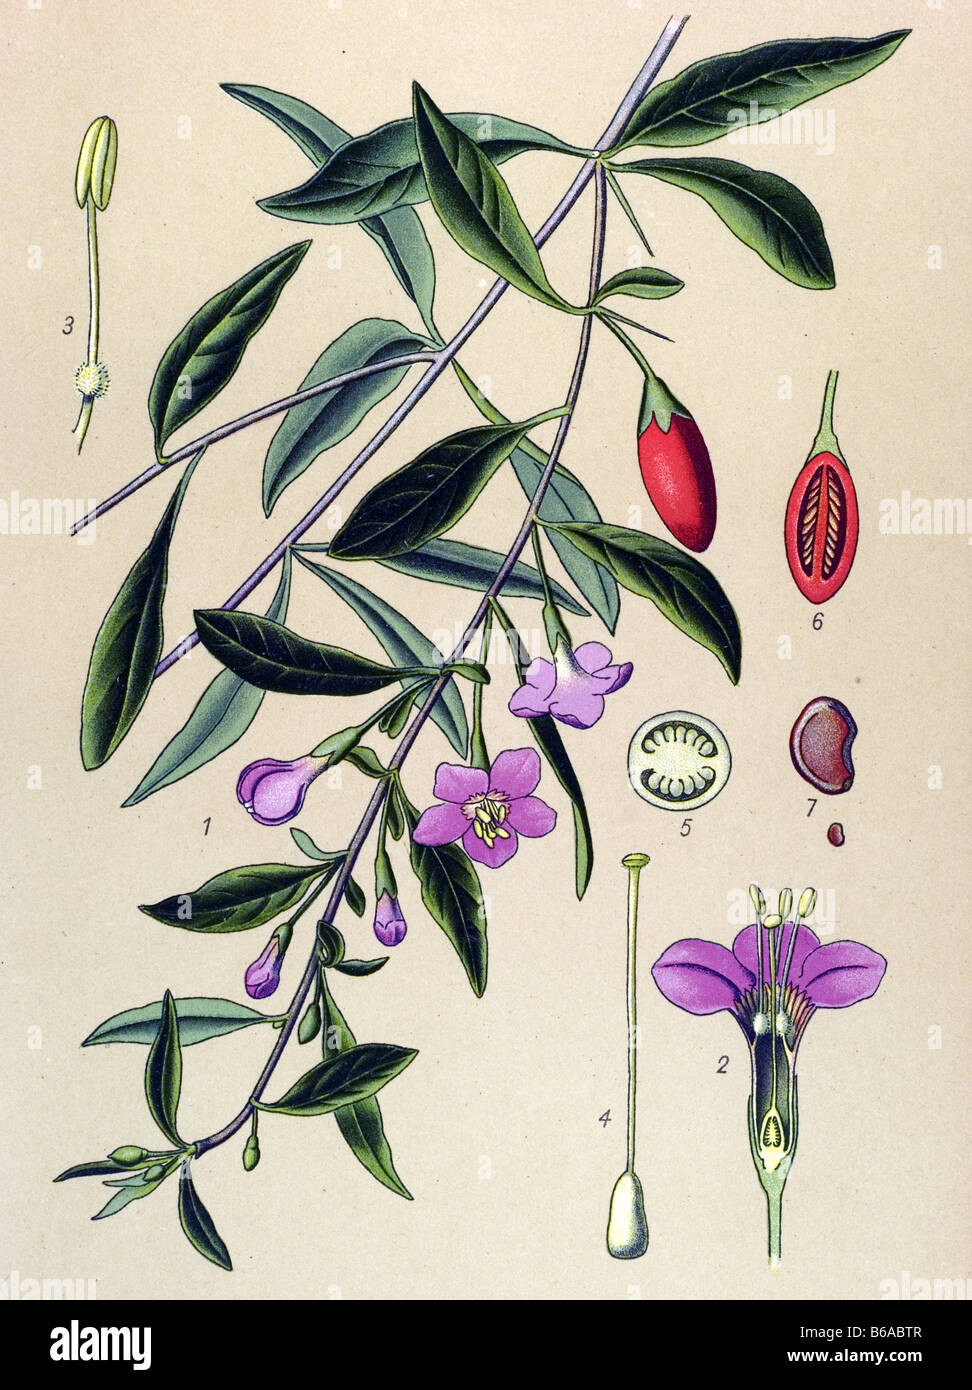 Wolfberry, Lycium halimifolium poisonous plants illustrations Stock Photo